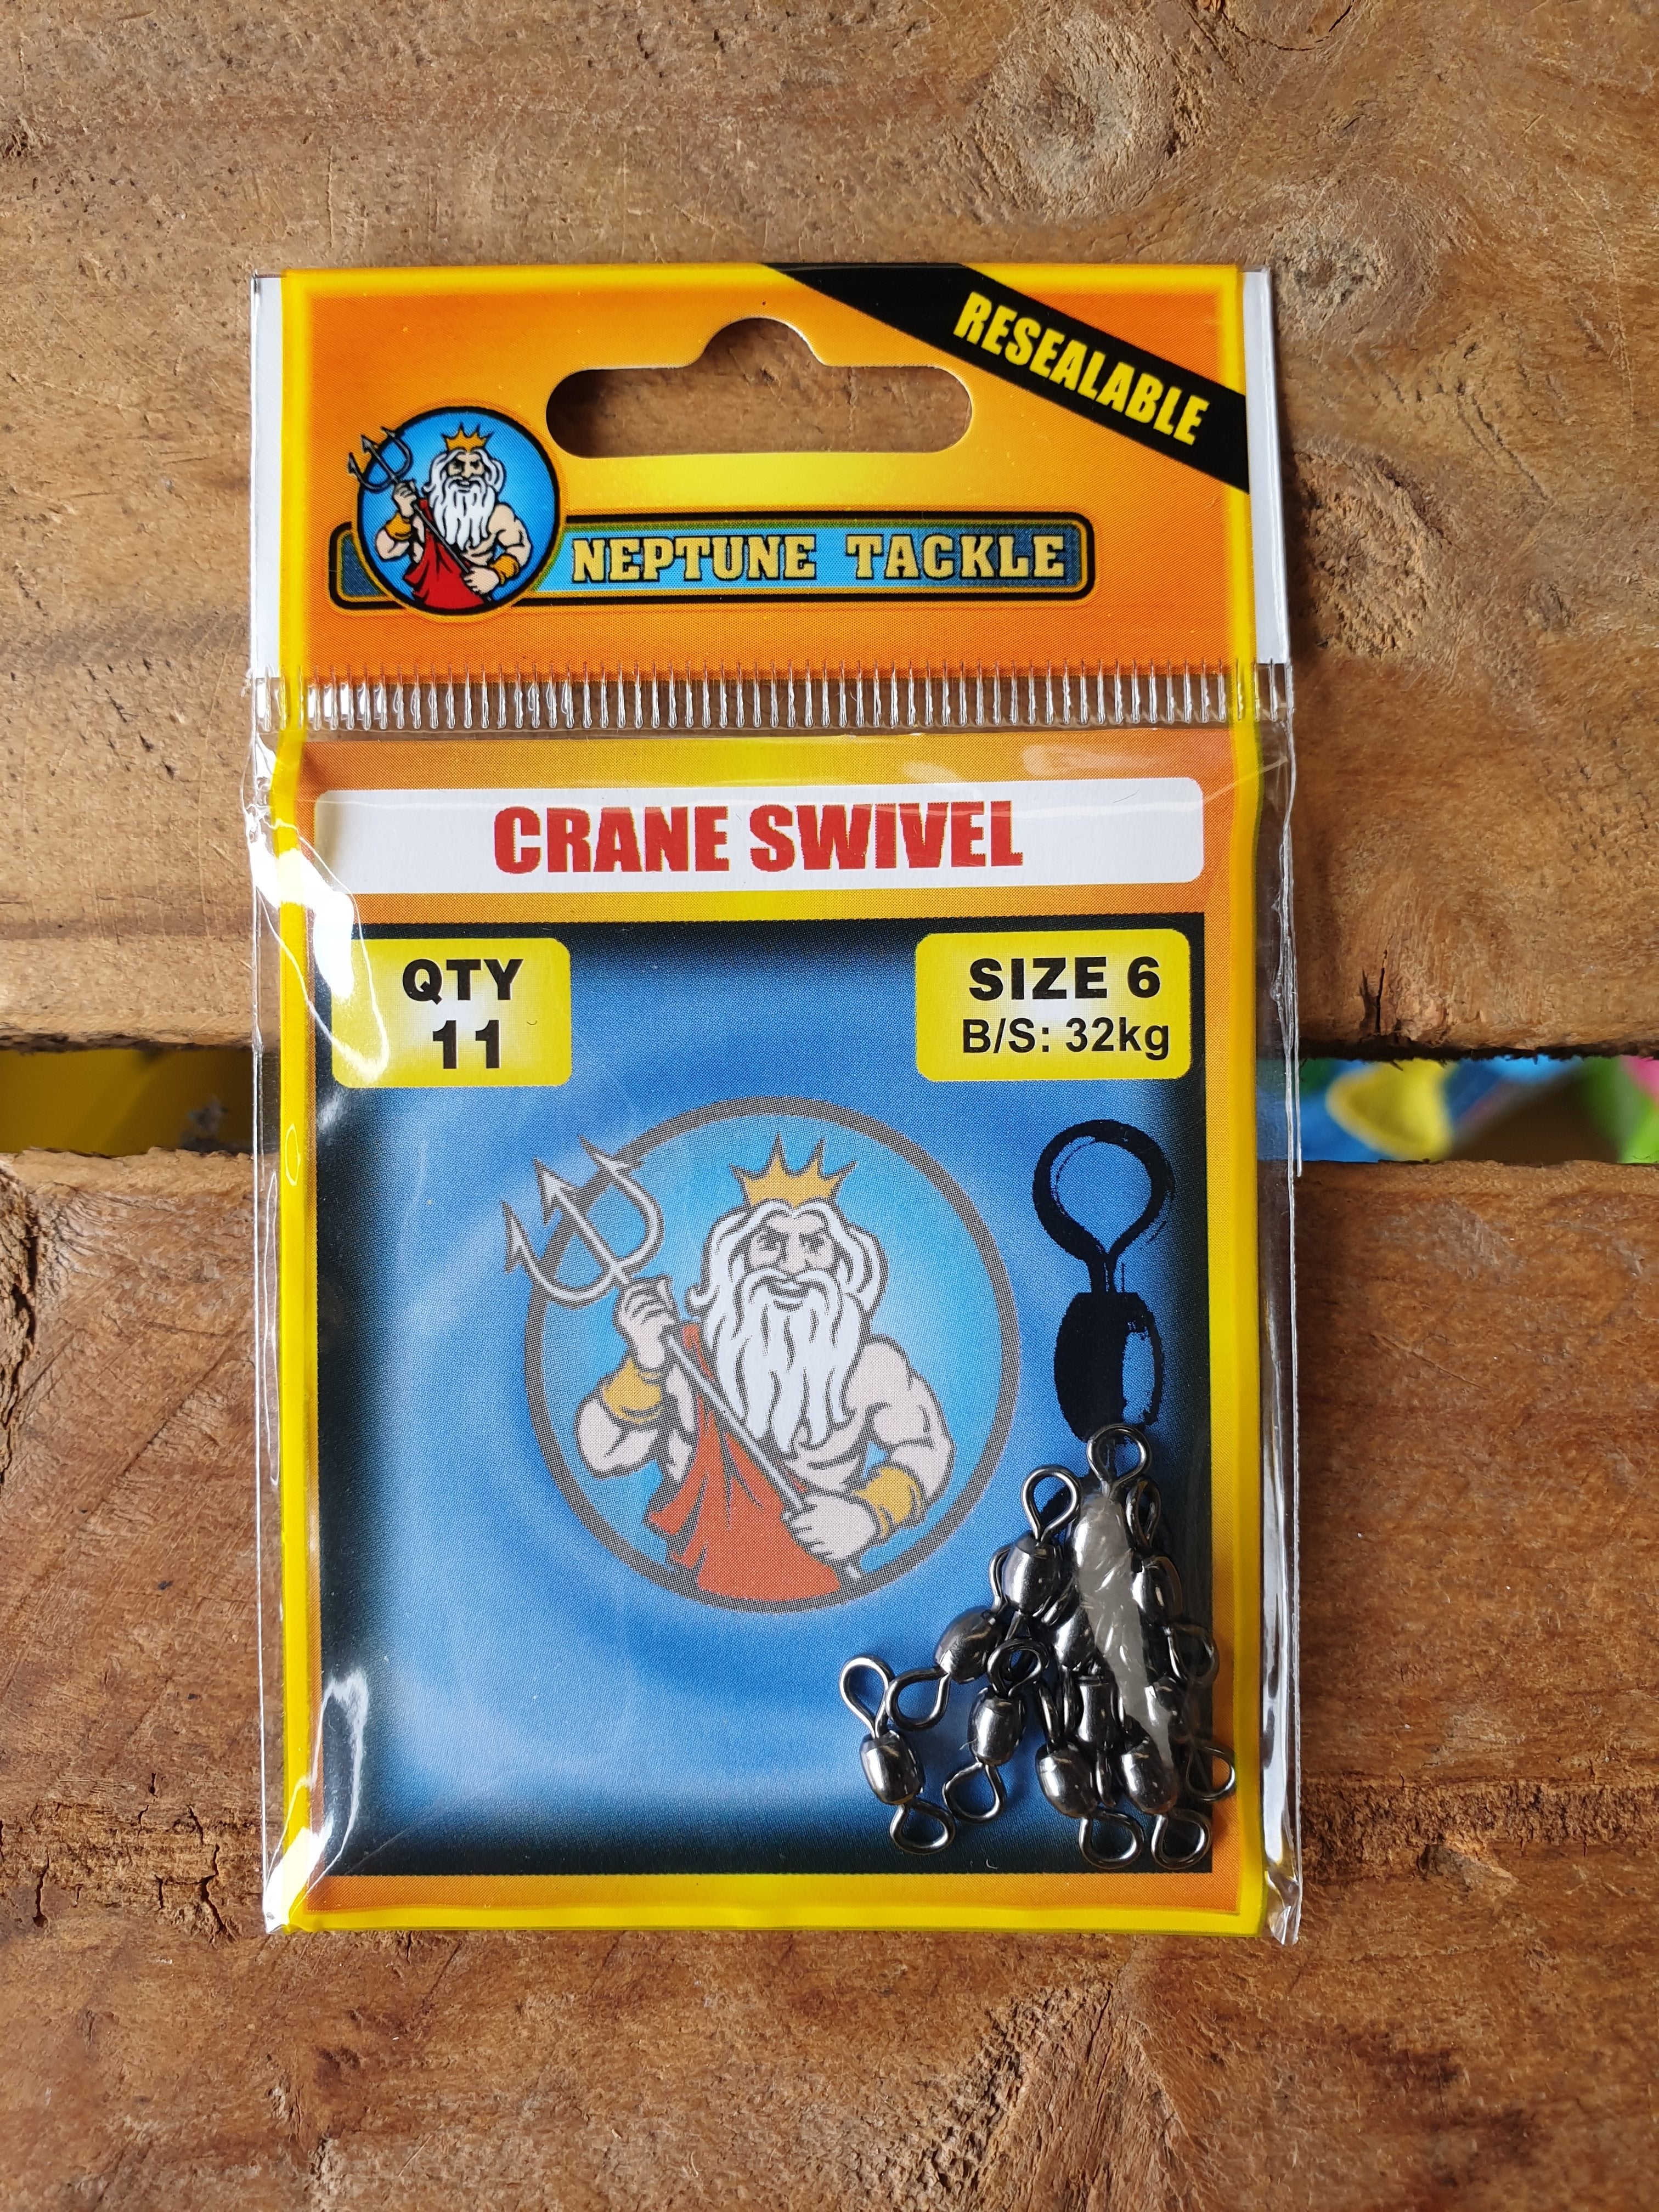 Crane Swivel